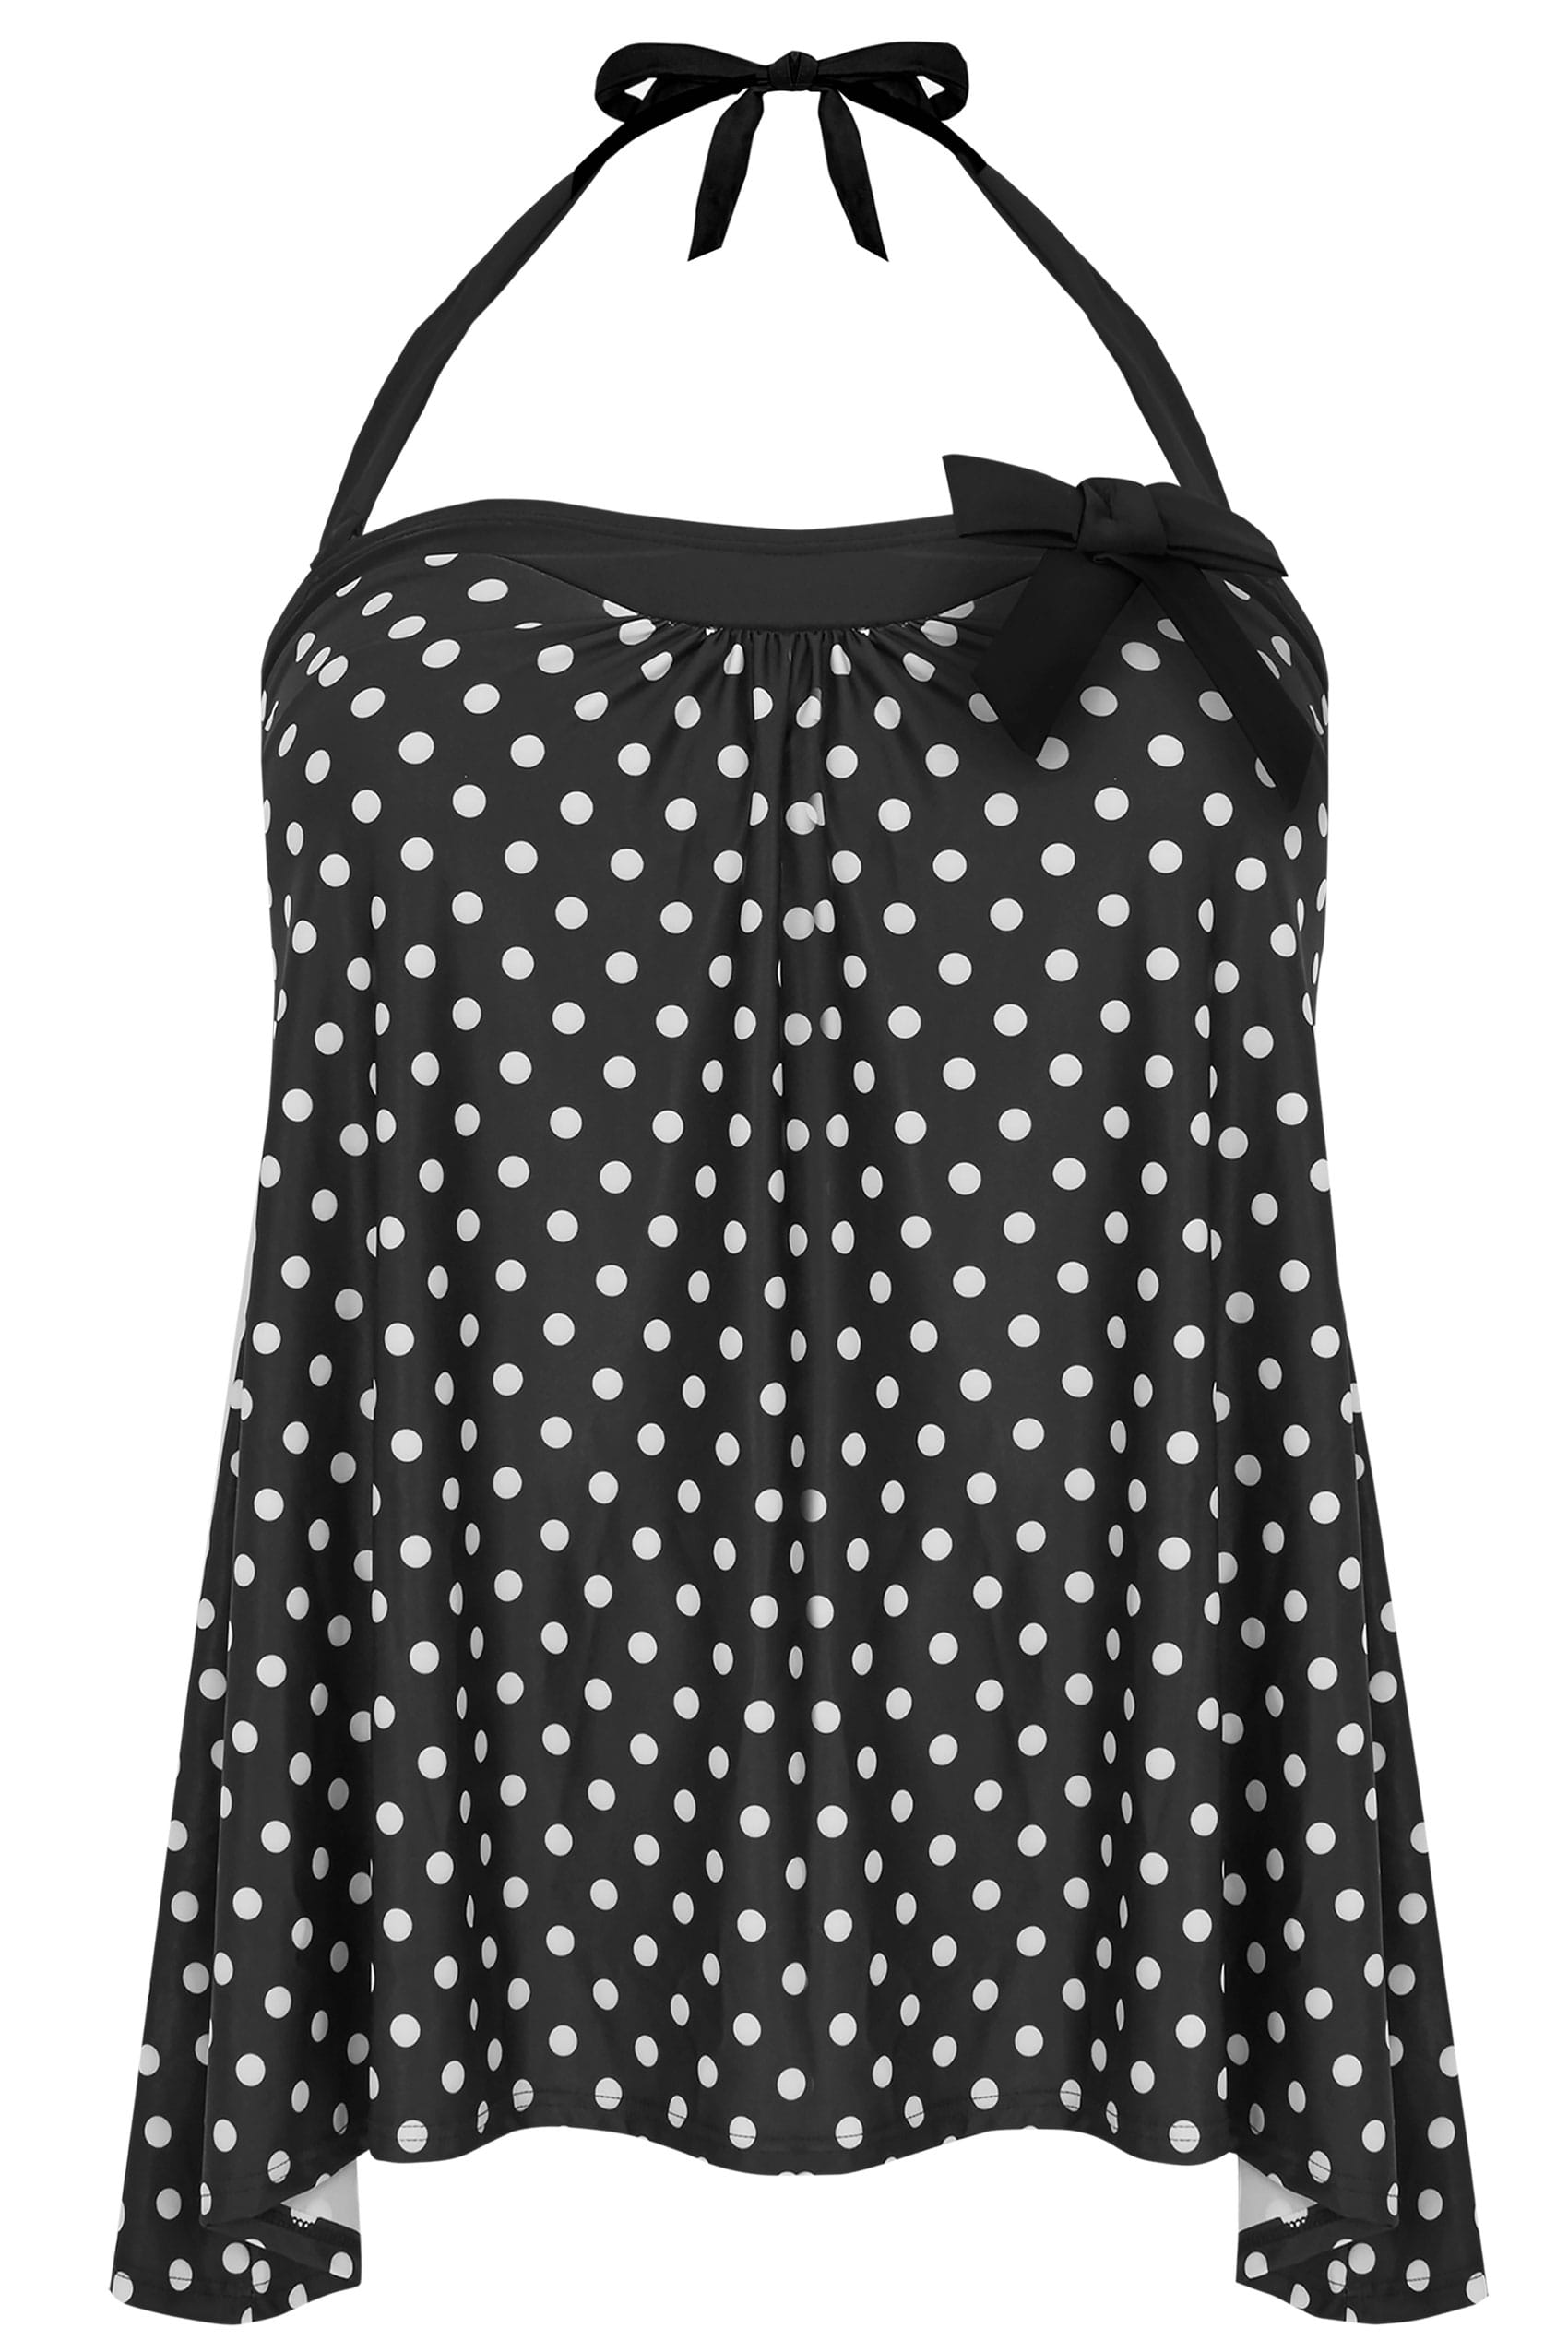 Swimwear 6 black with white polka dots